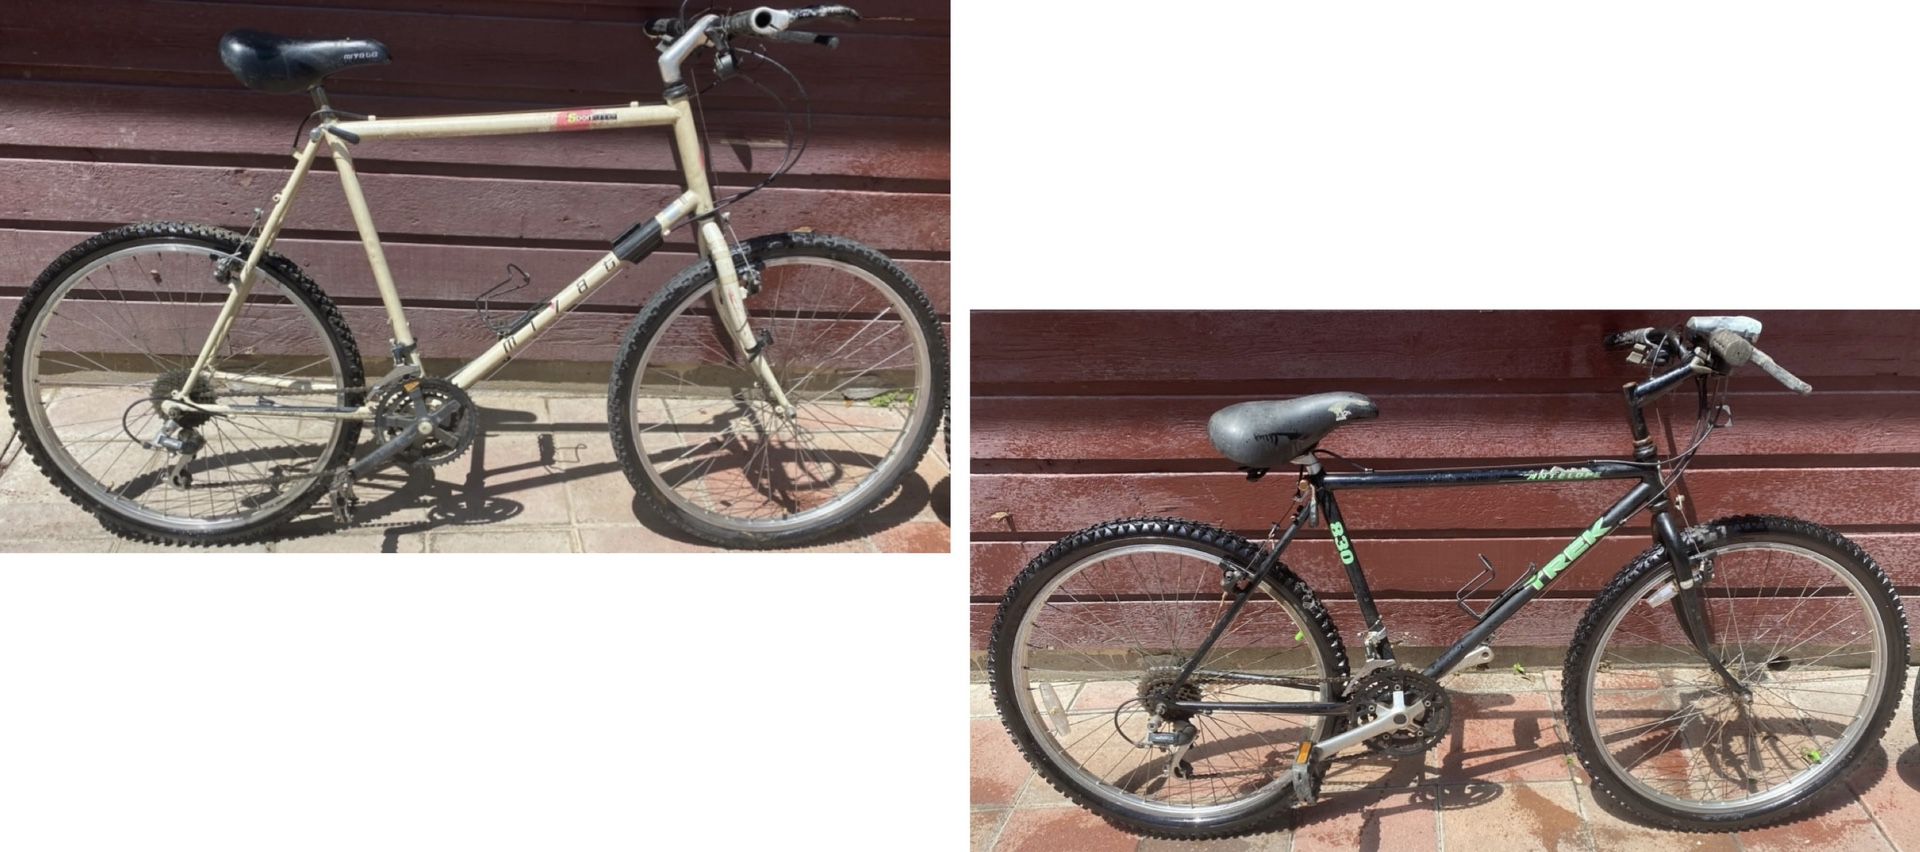 $150 Buys Both! A Larger Size MYATA Mountain Bike, A Med Size TREK Mountain Bike.